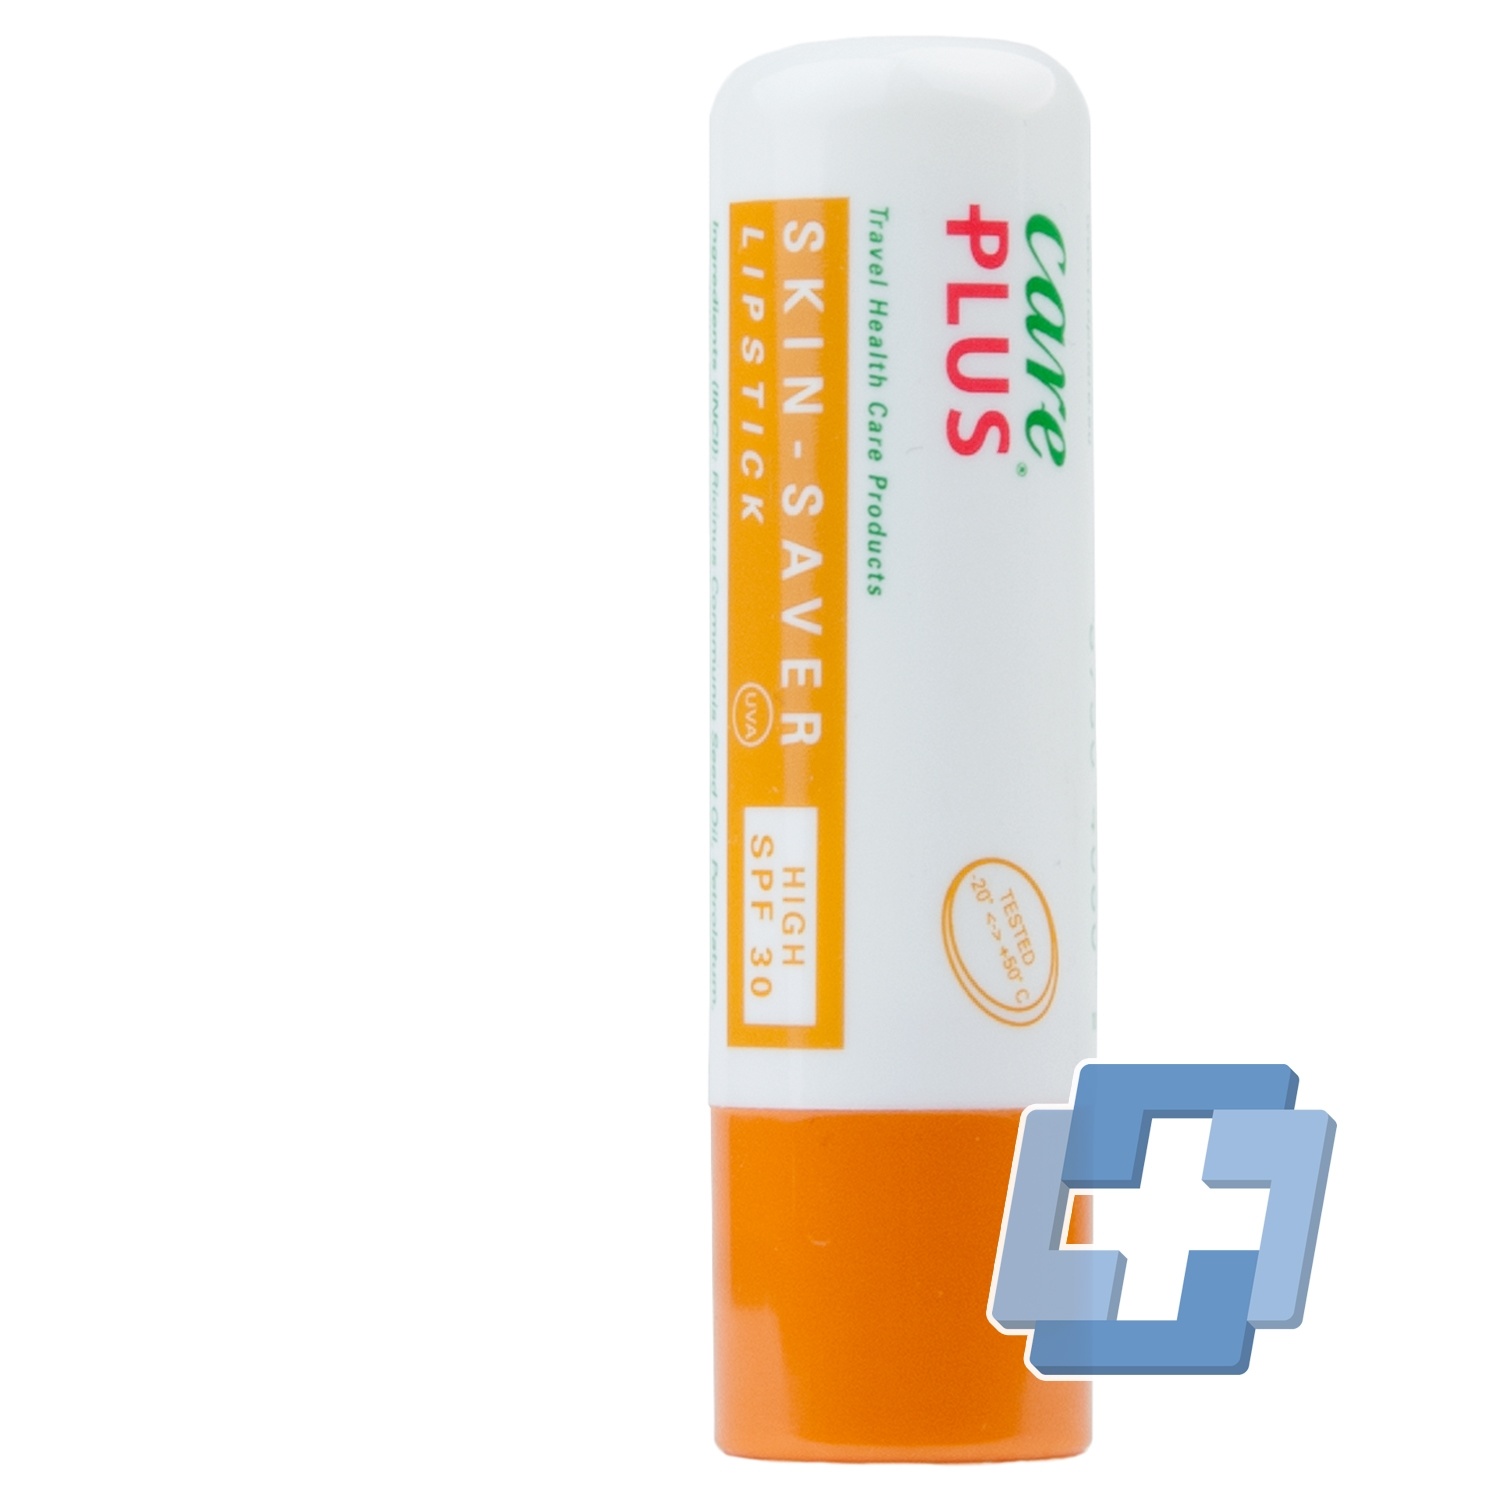 Dom Bereiken genoeg Care Plus Skin-saver lipstick SPF 30+ | 5321014185 - EVAC